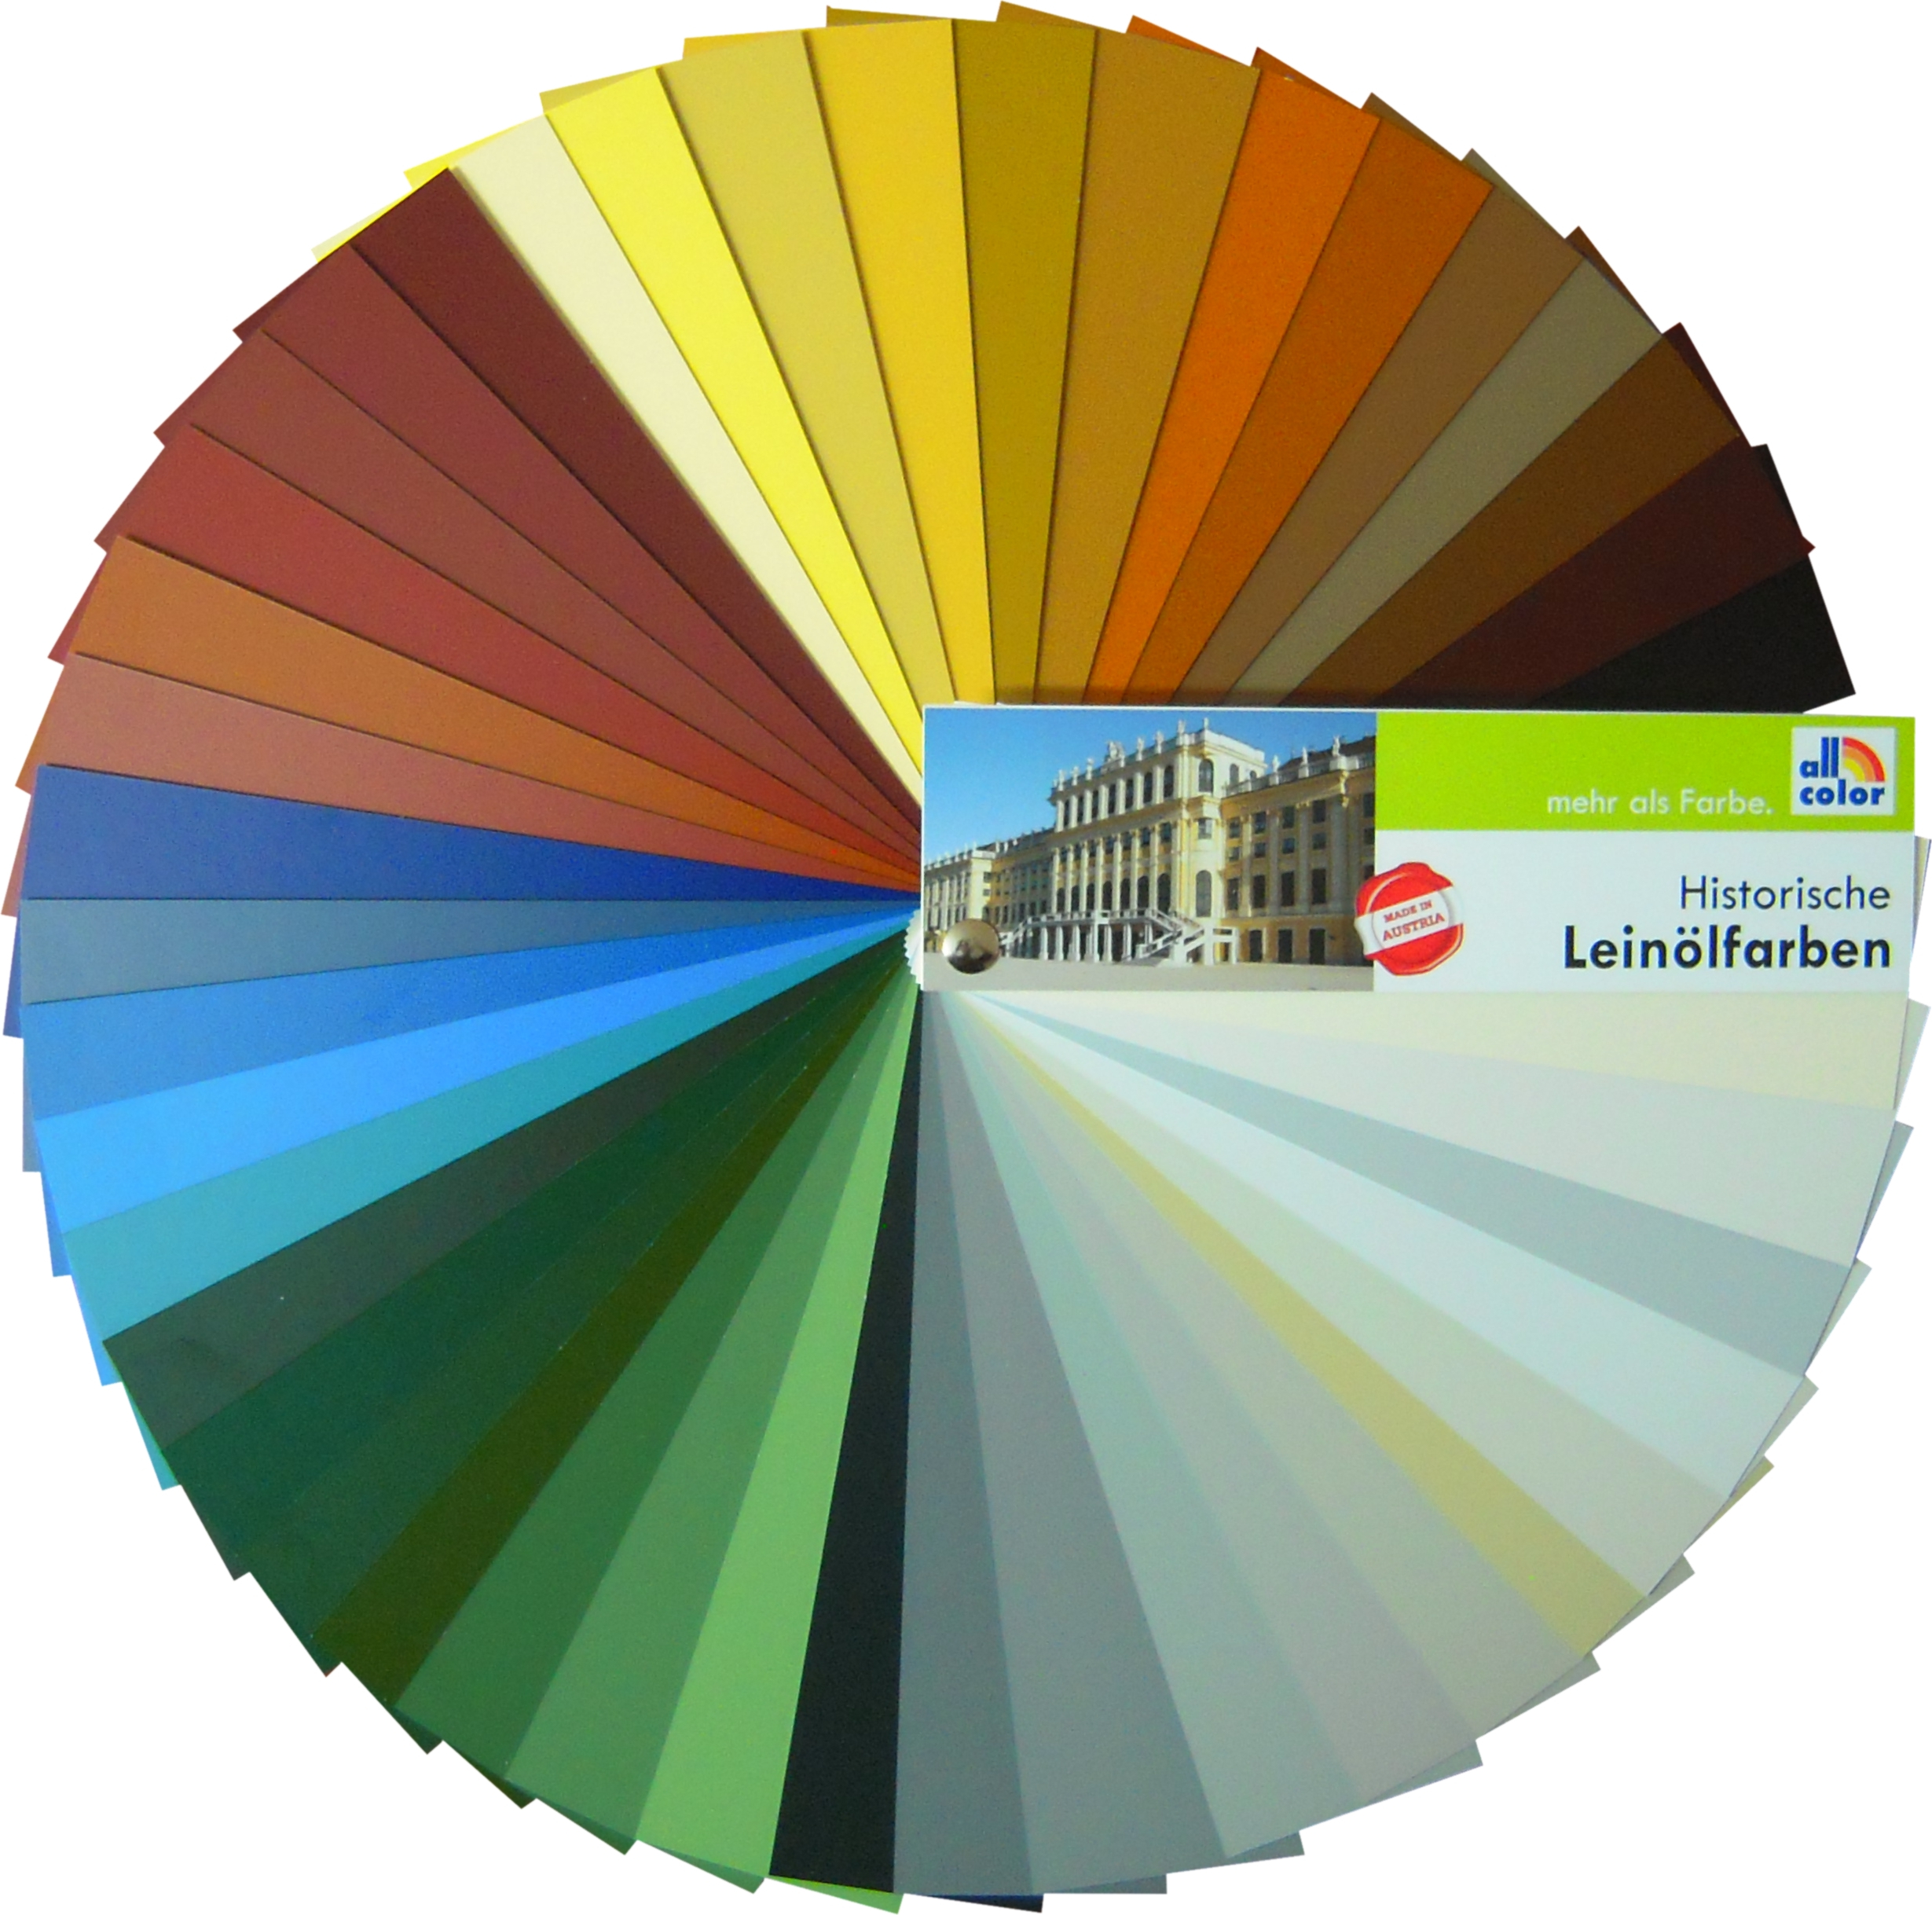 All-color Farbfächer - "Historische Leinölfarben"